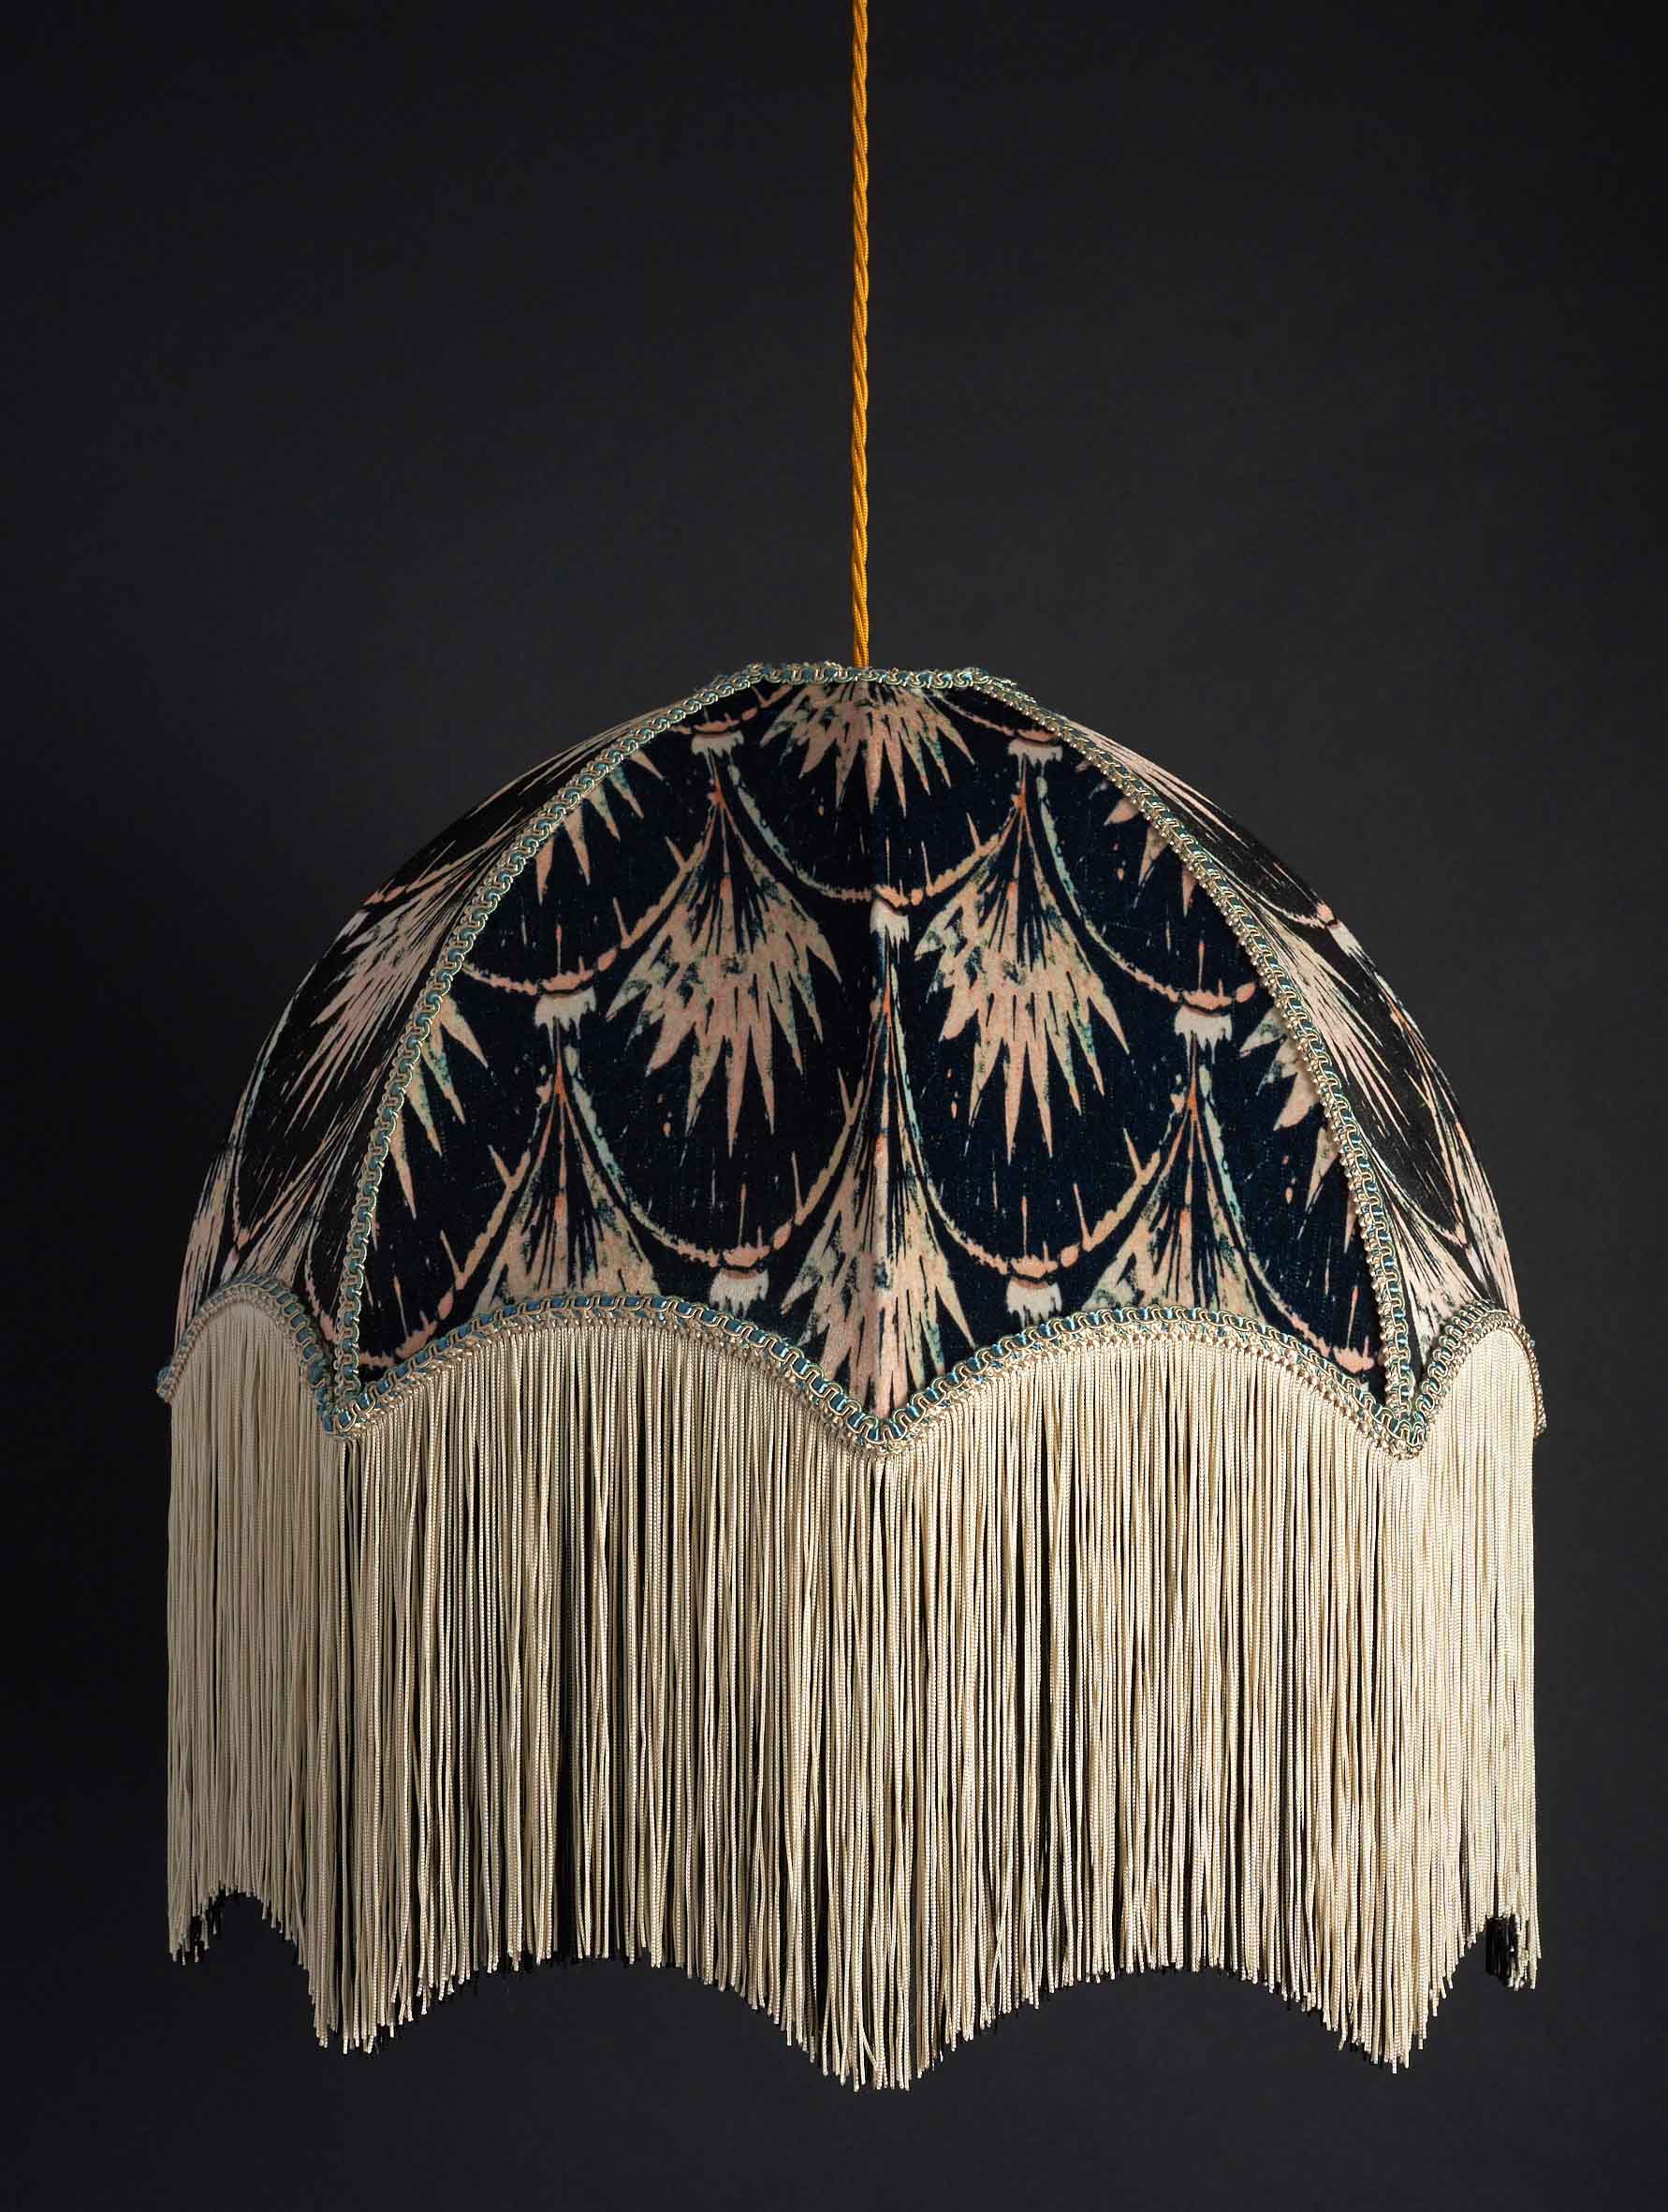 bibana lamp by Anna Hayman